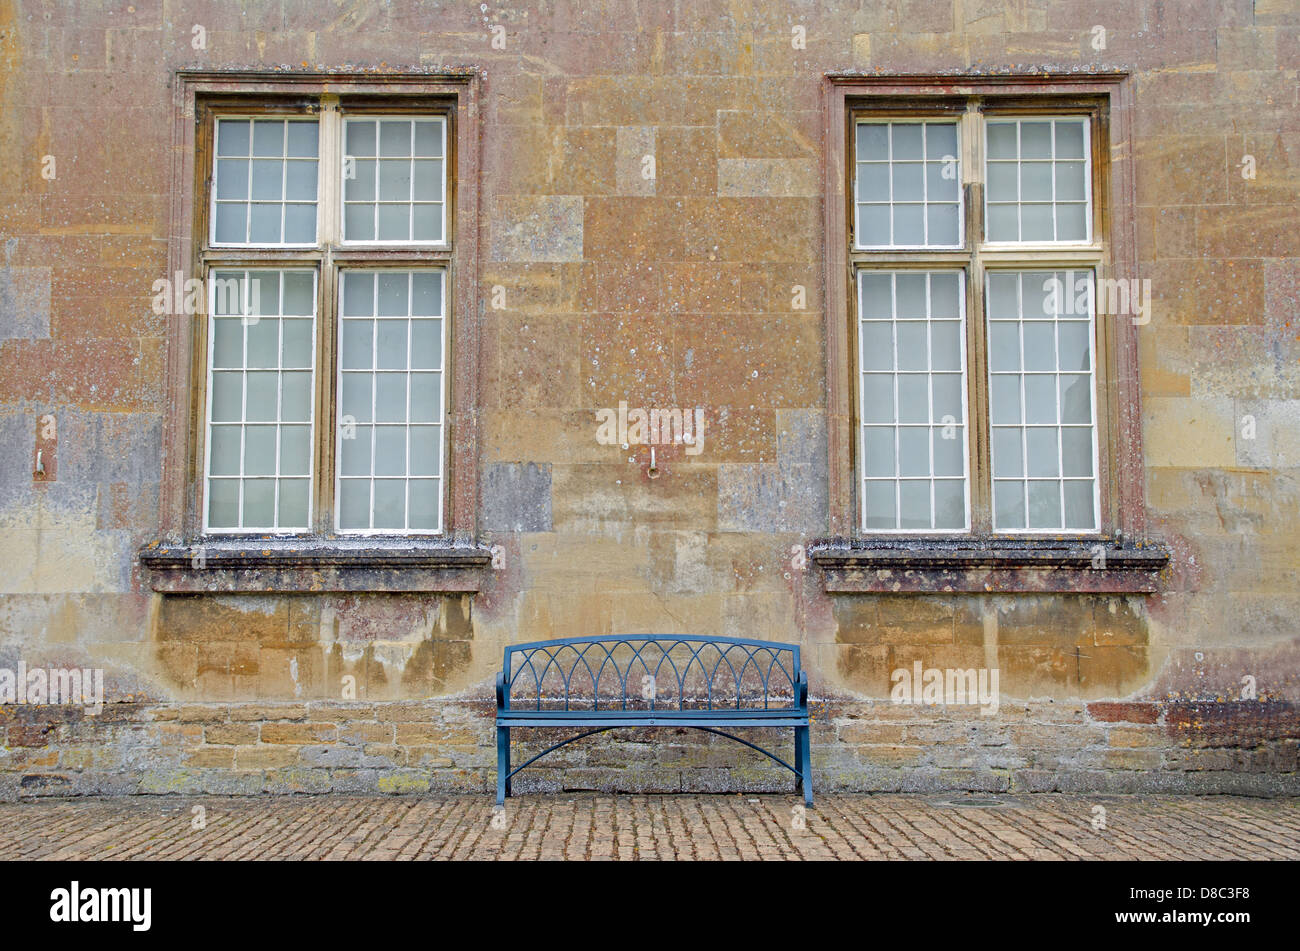 Empty iron bench on cobblestones against Bath stone facade Stock Photo